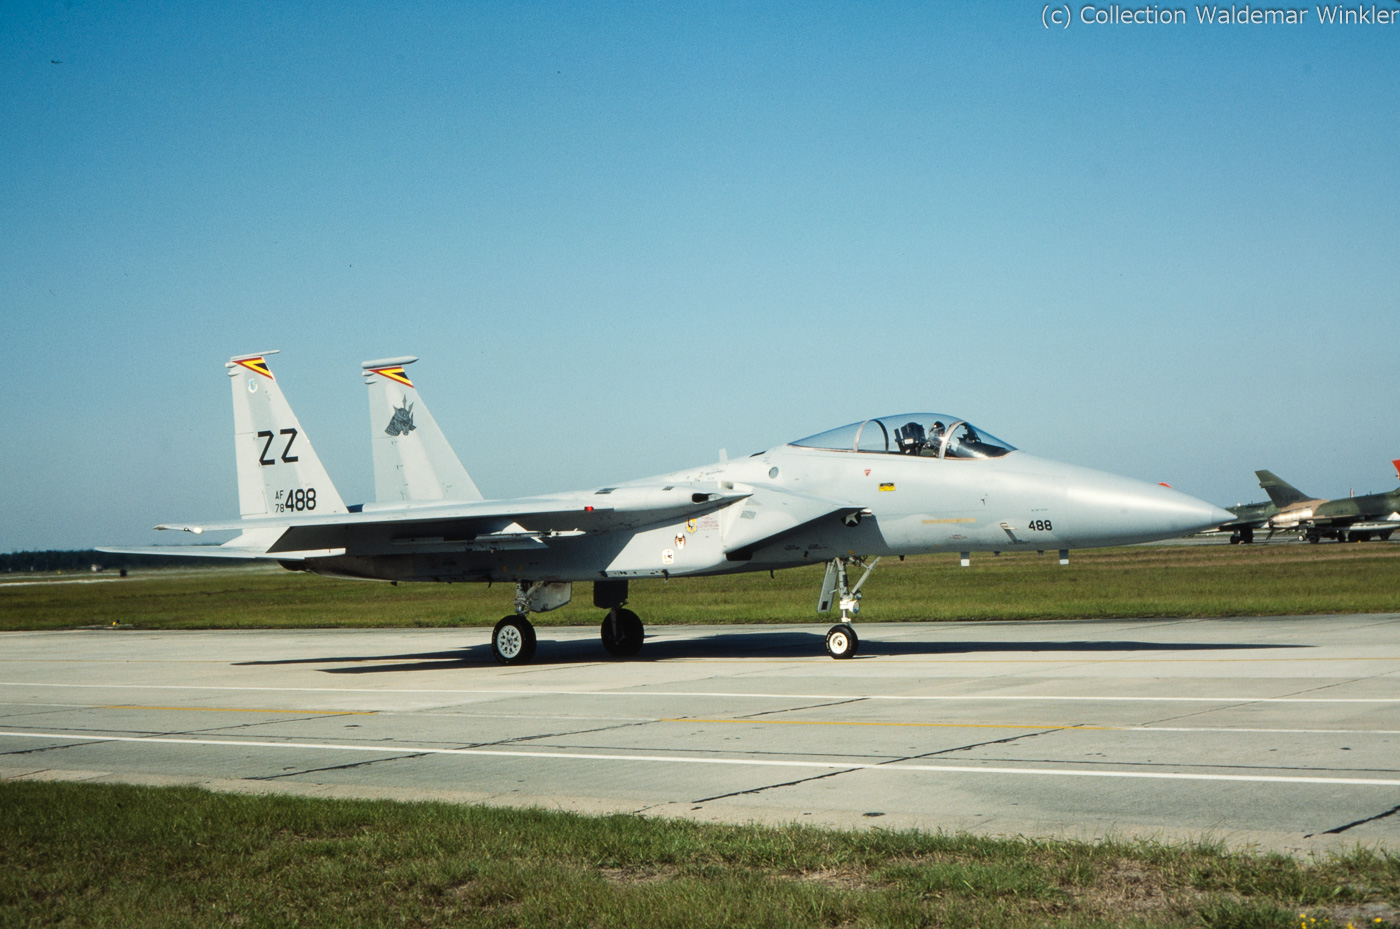 F-15A_Strike_Eagle_DSC_3179.jpg